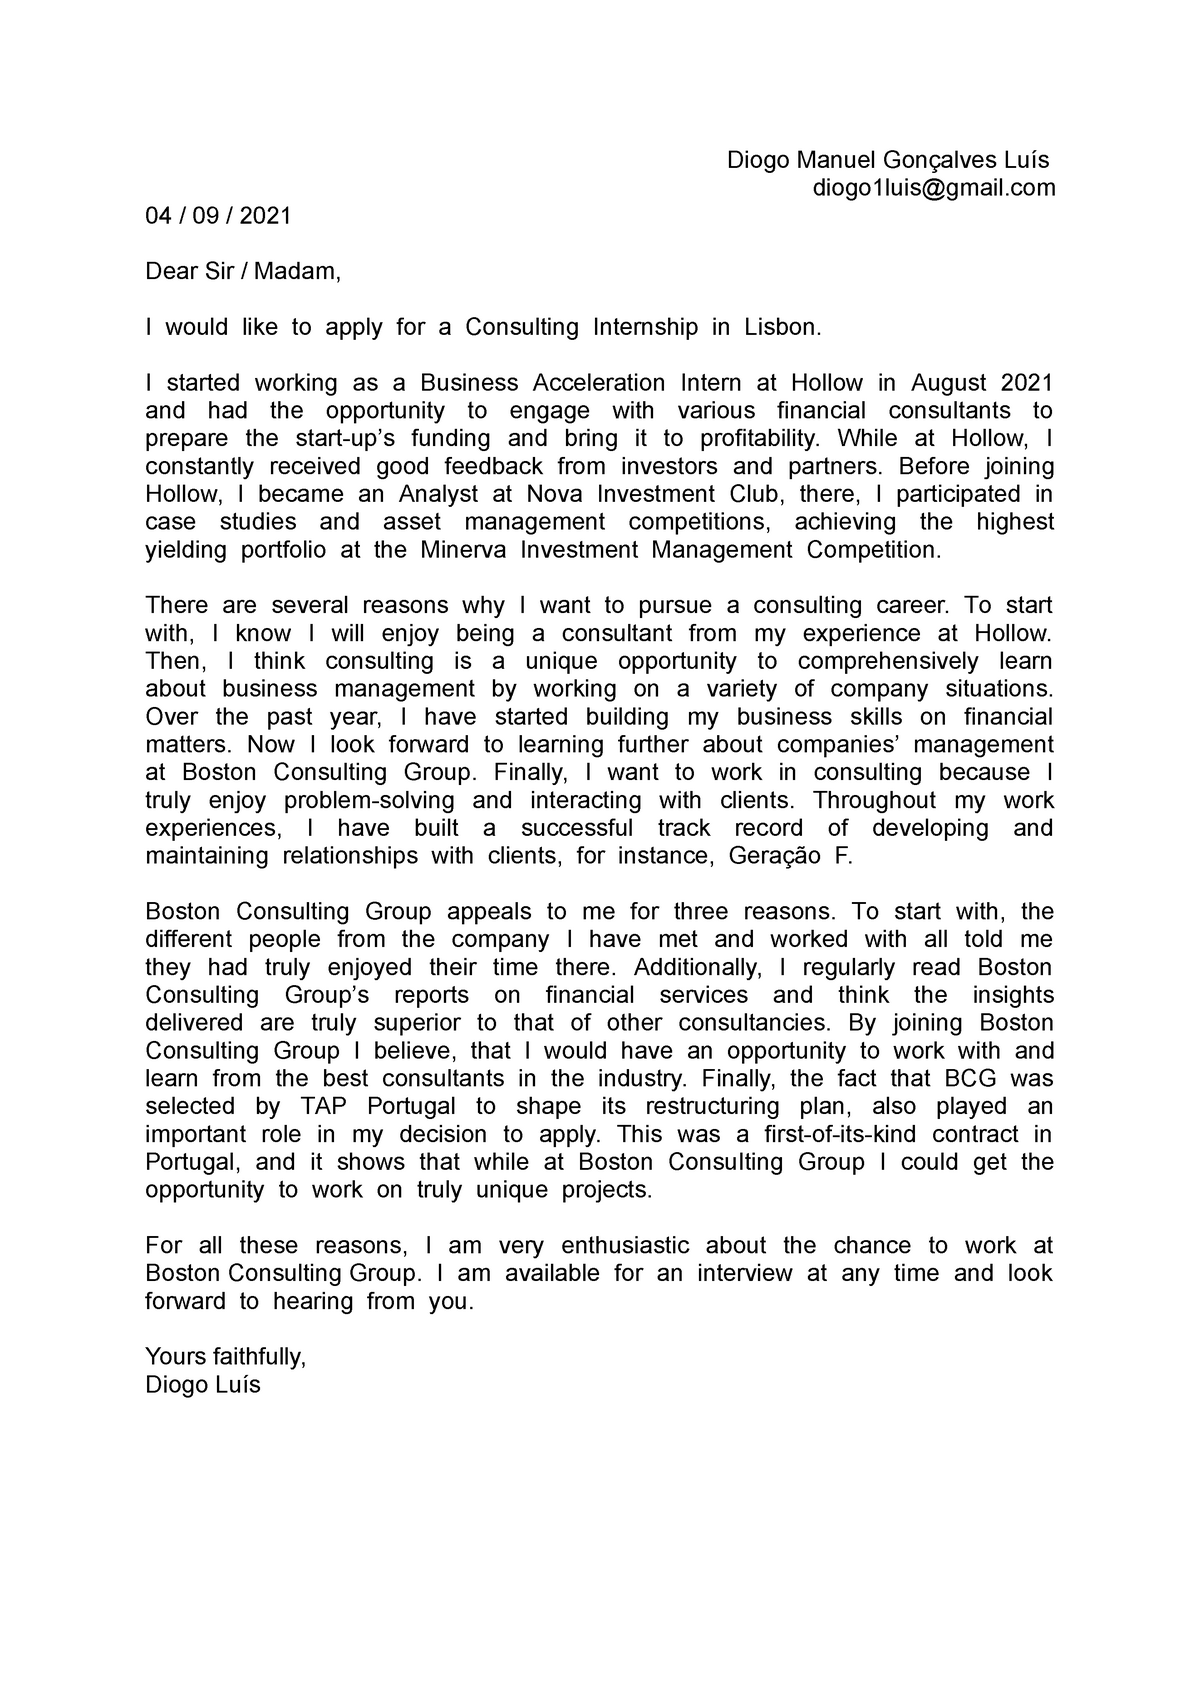 goldman sachs analyst cover letter